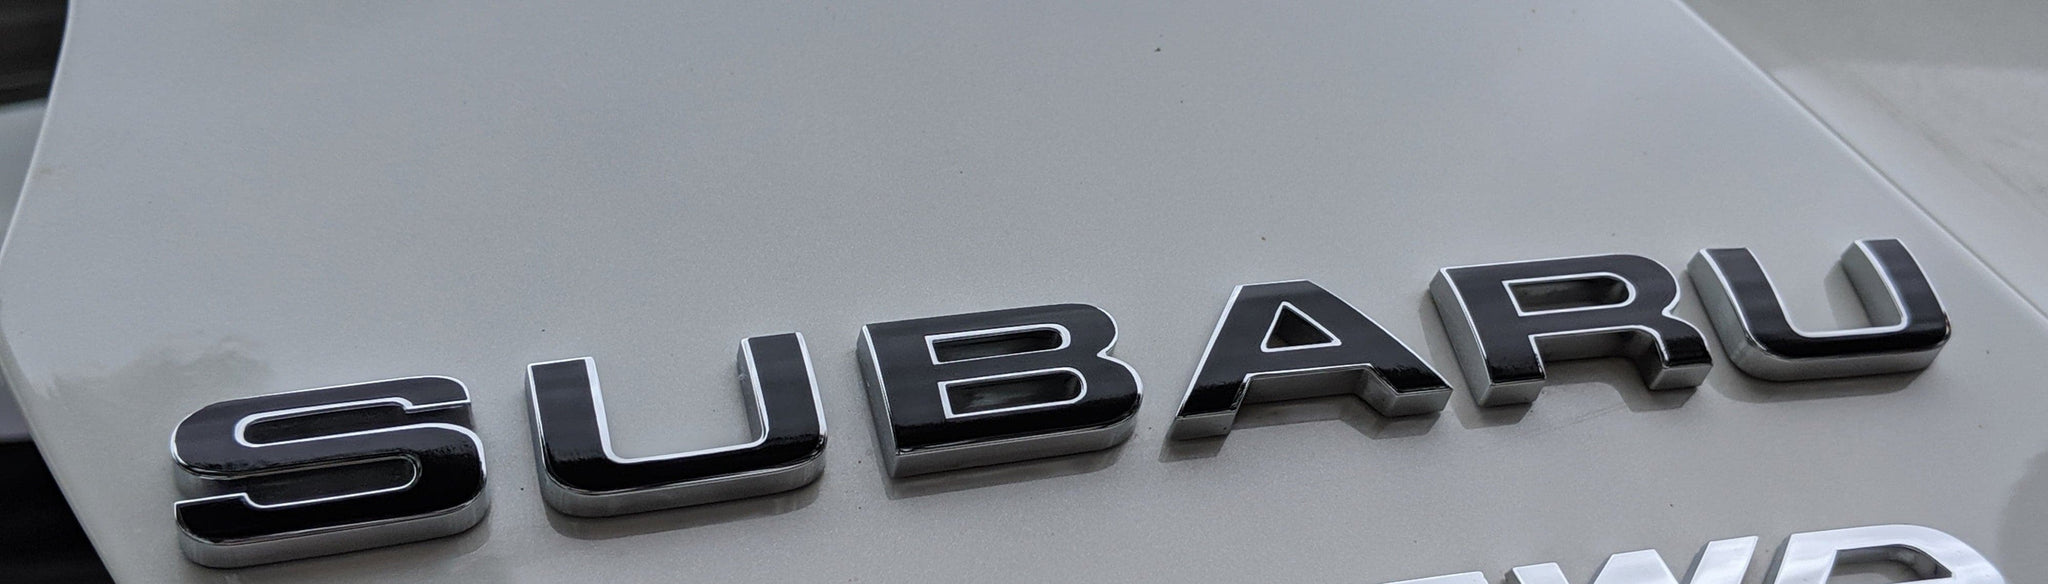 2014-2019 Subaru Legacy - Subaru Rear Emblem VinylMod Overlay - VinylMod